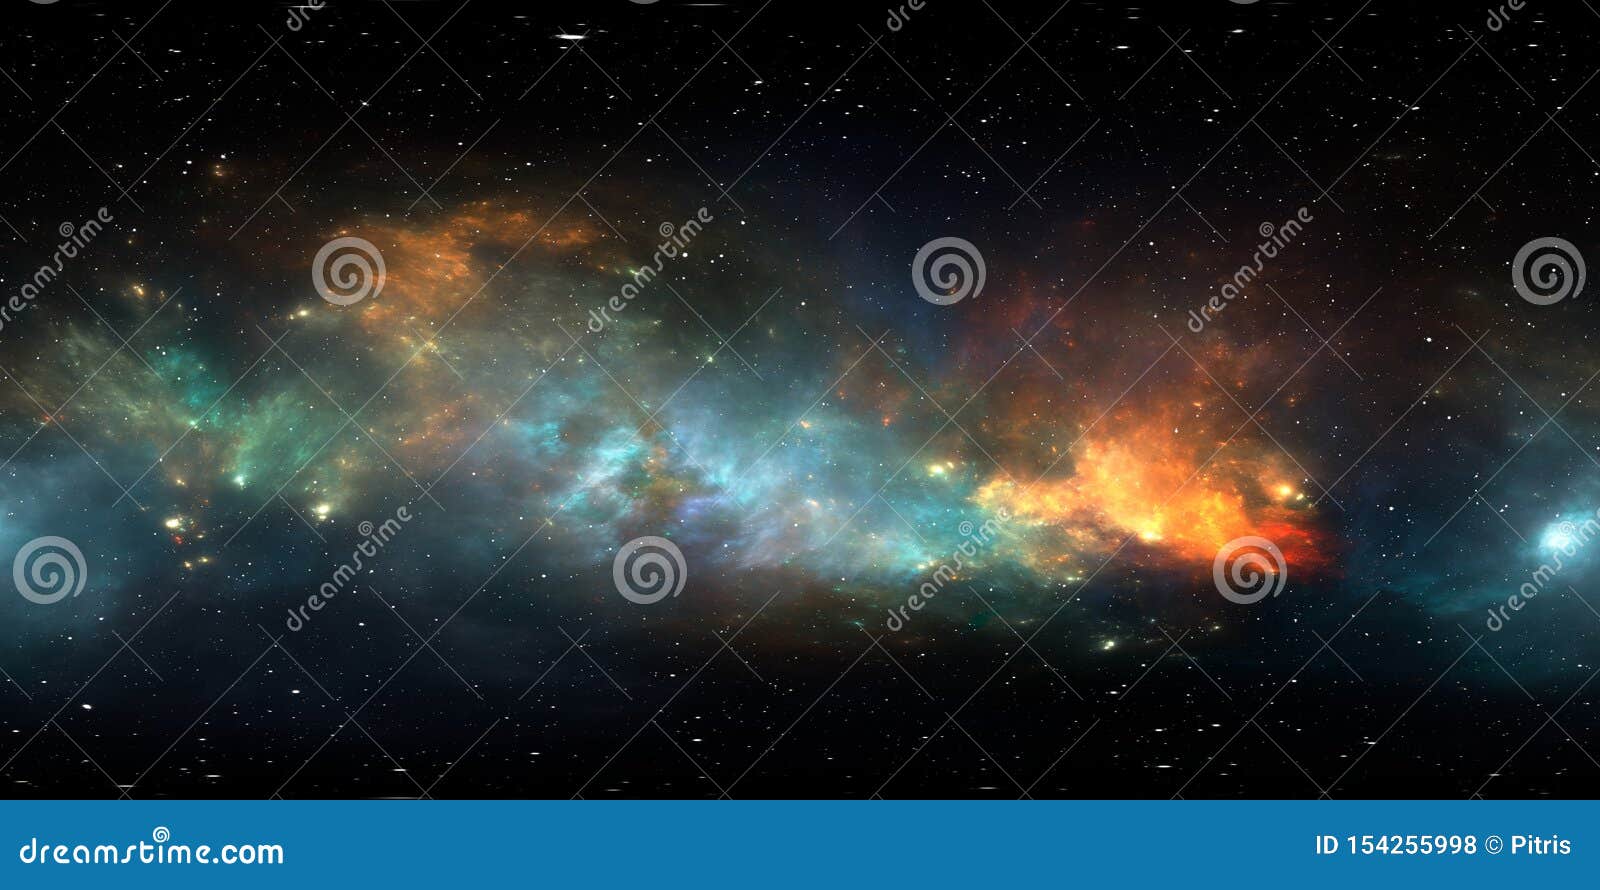 360 degree stellar system and gas nebula. panorama, environment 360 hdri map. equirectangular projection, spherical panorama